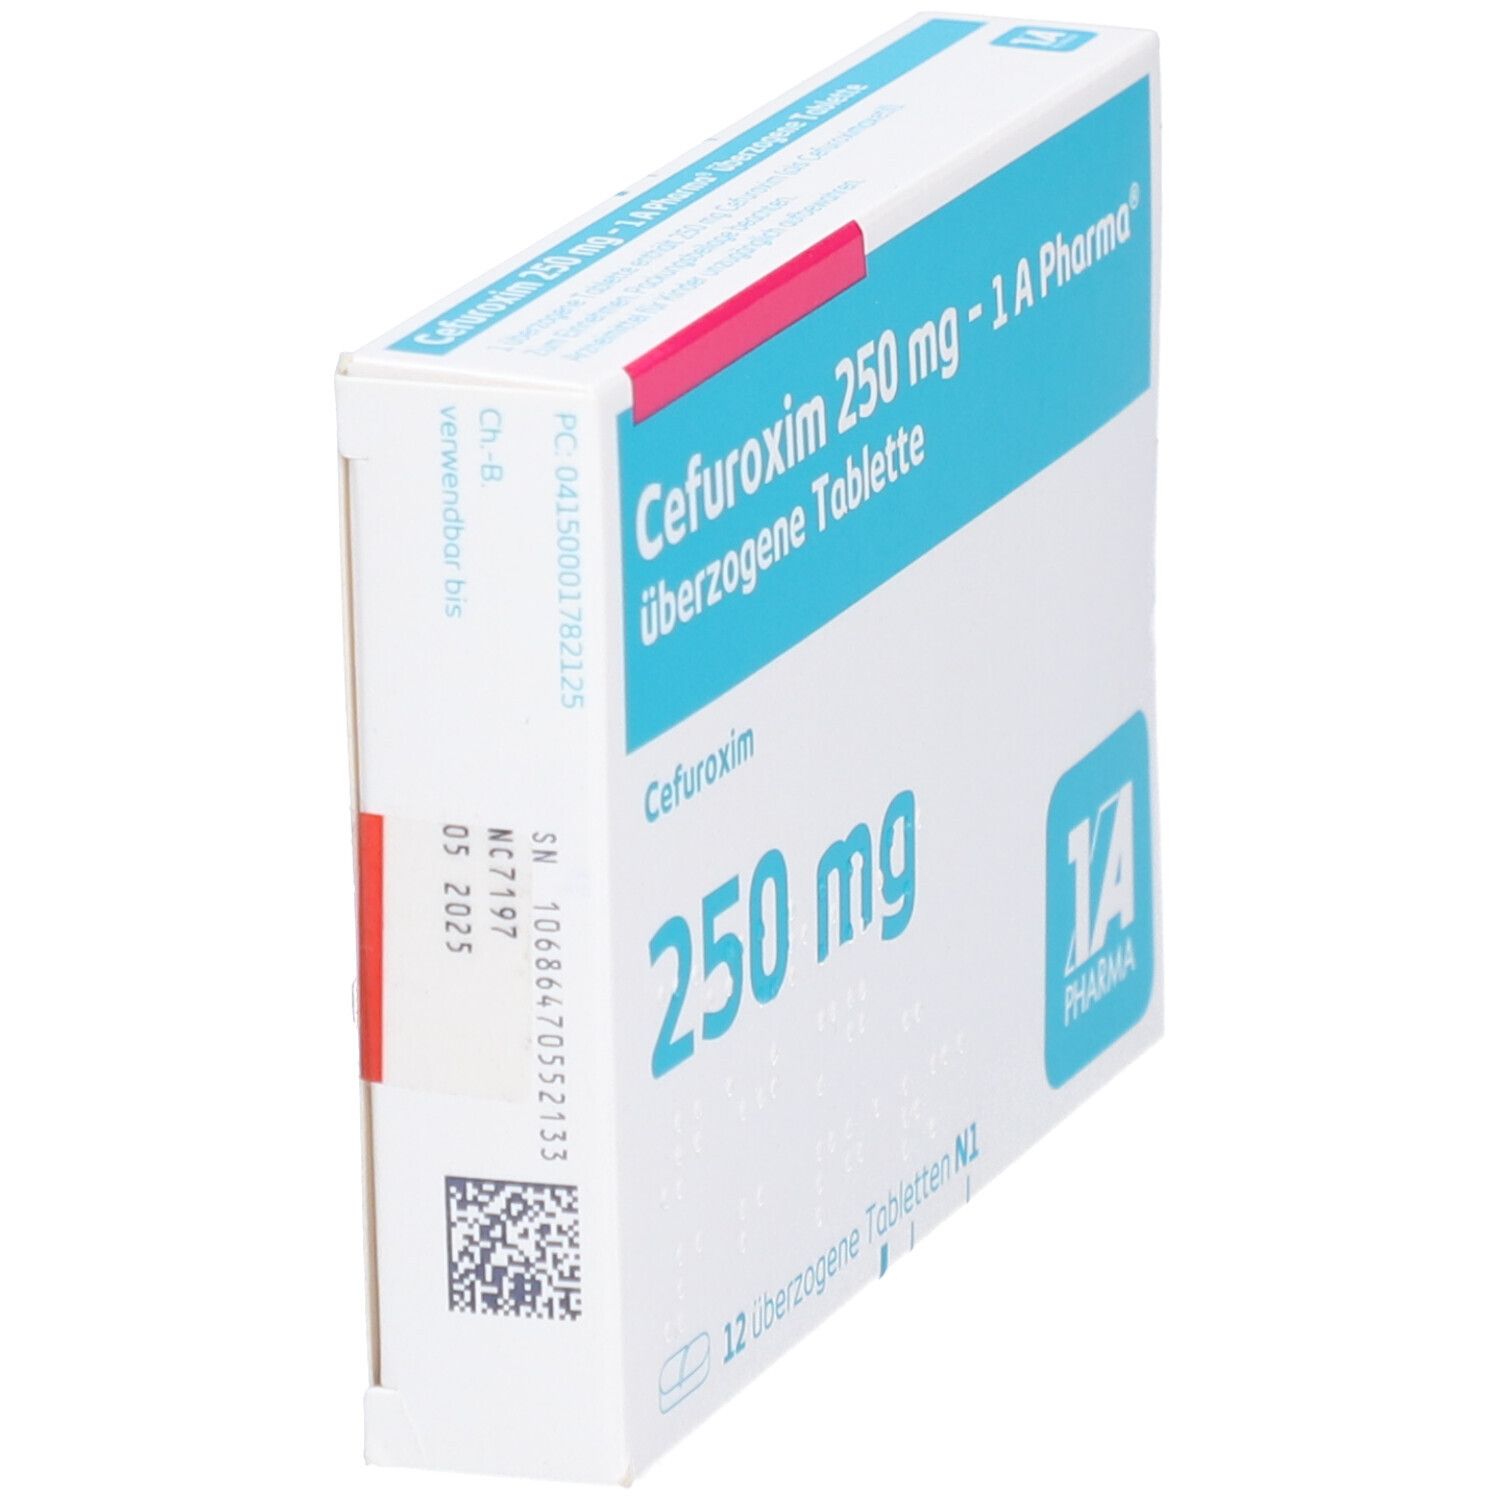 Cefuroxim 250Mg 1A Pharma®